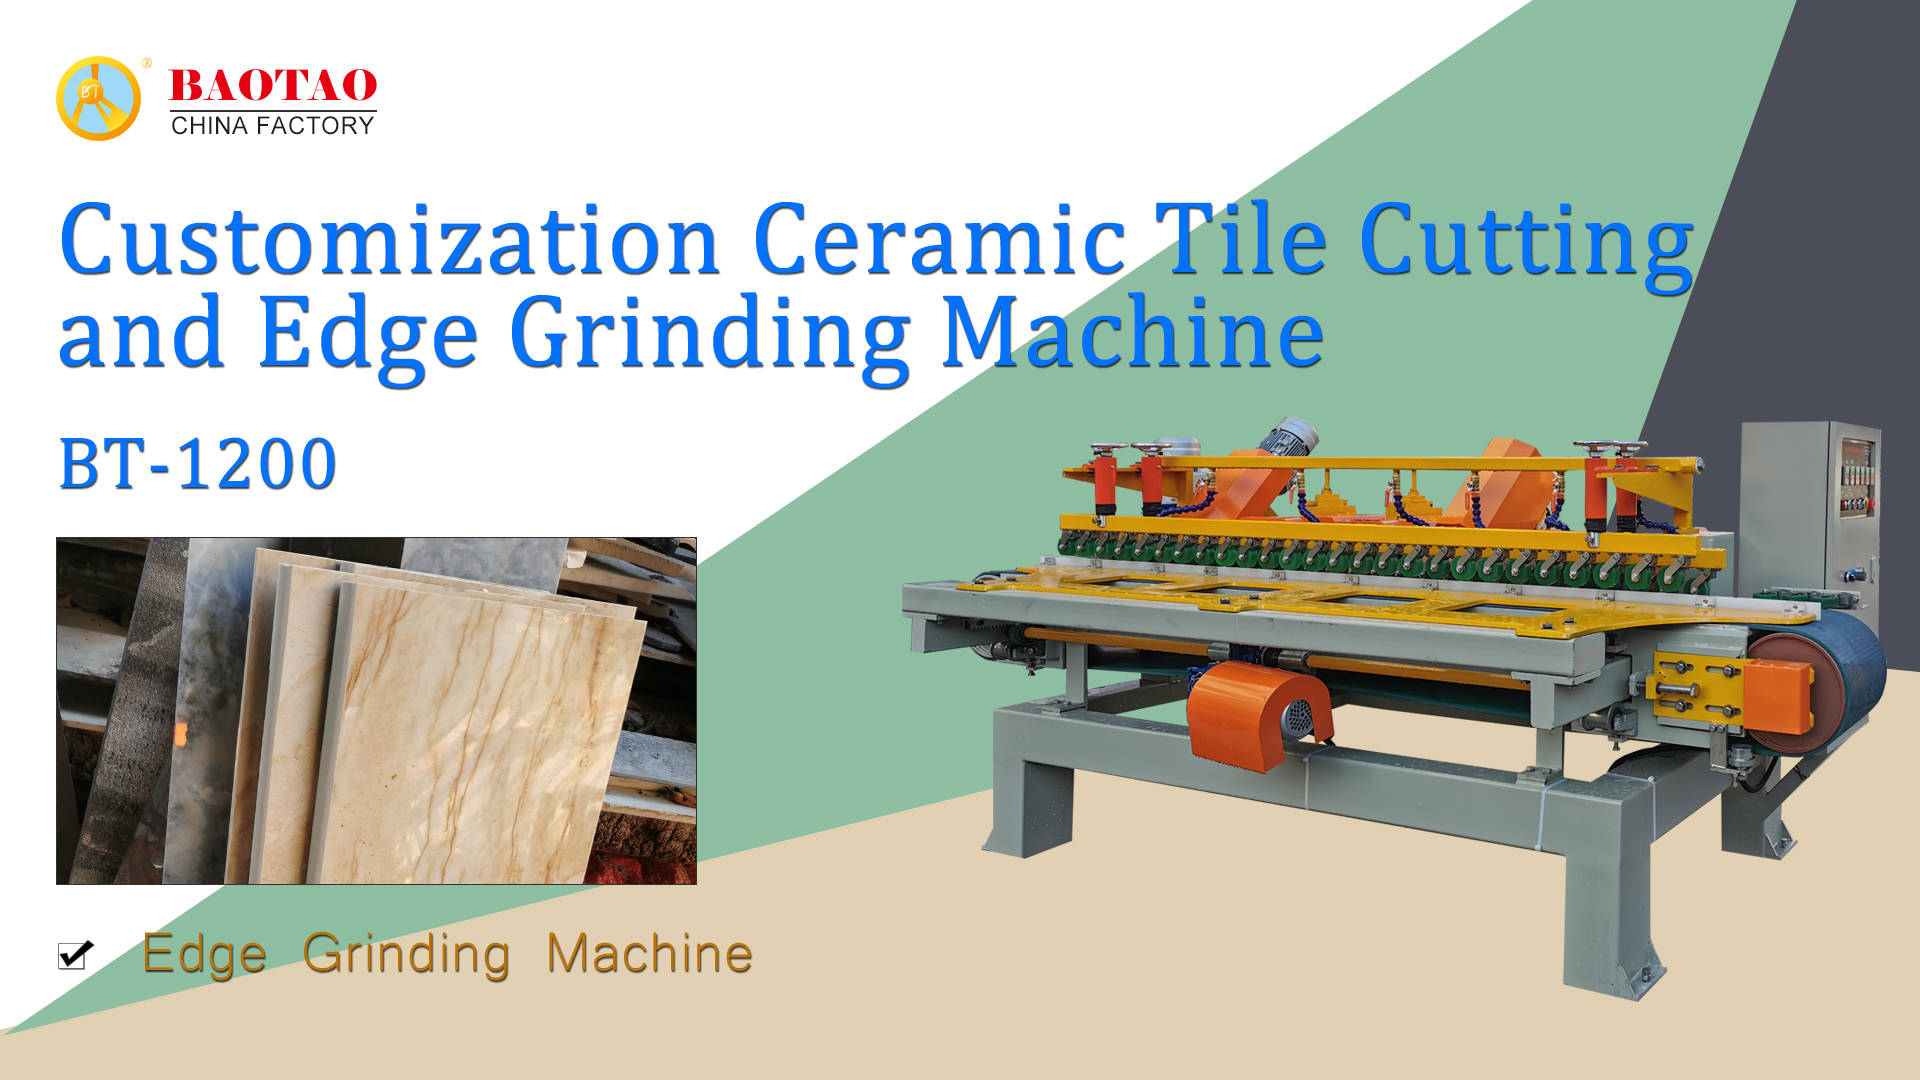 Baotao Ceramic Tile Cutting and Edge Grinding Machine